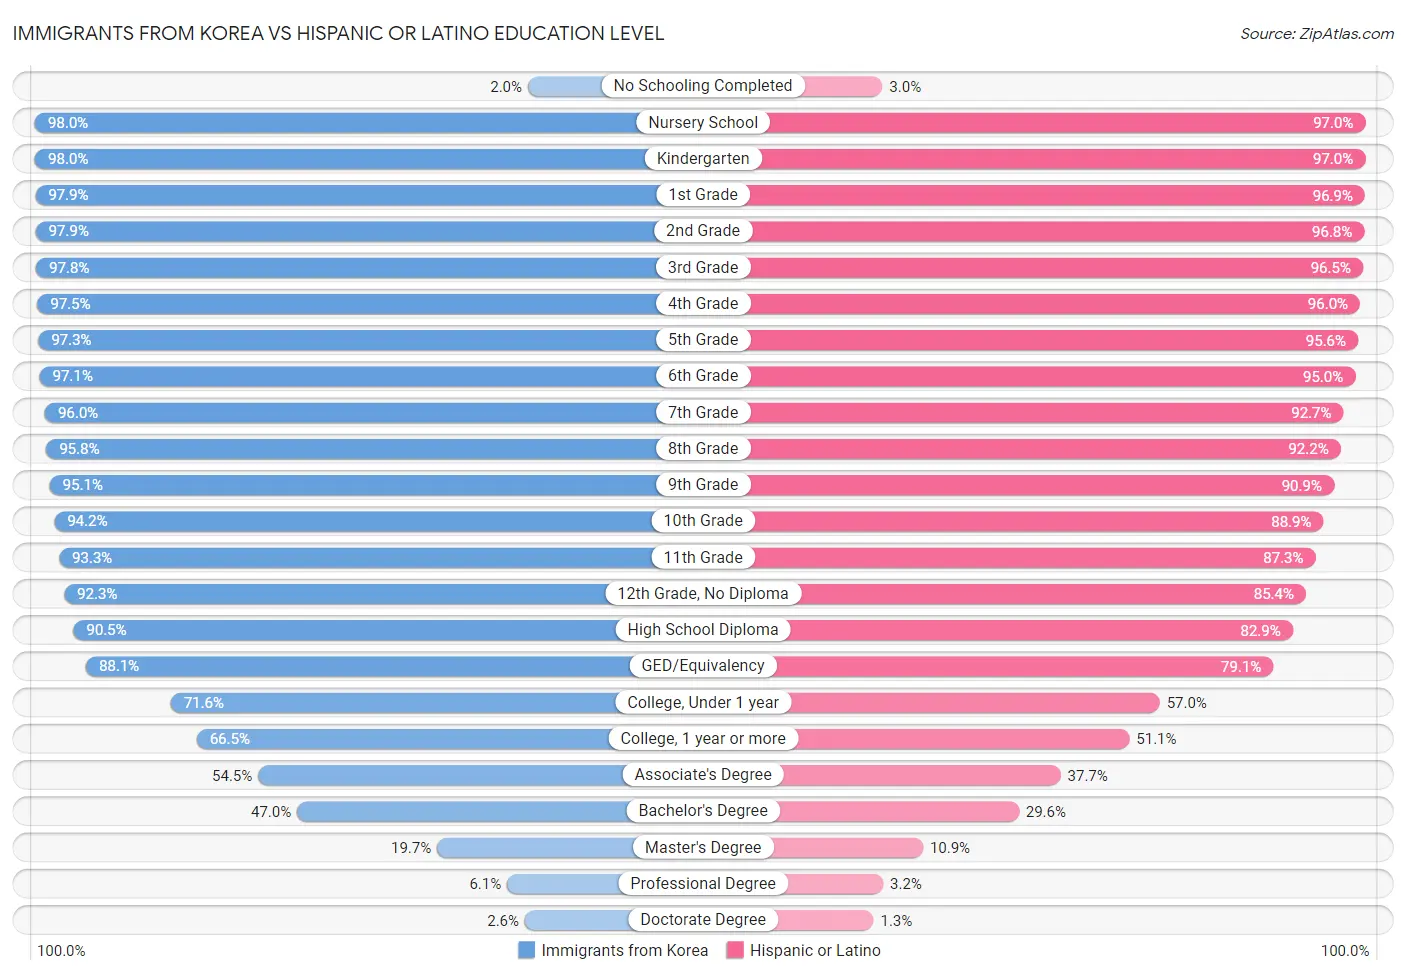 Immigrants from Korea vs Hispanic or Latino Education Level